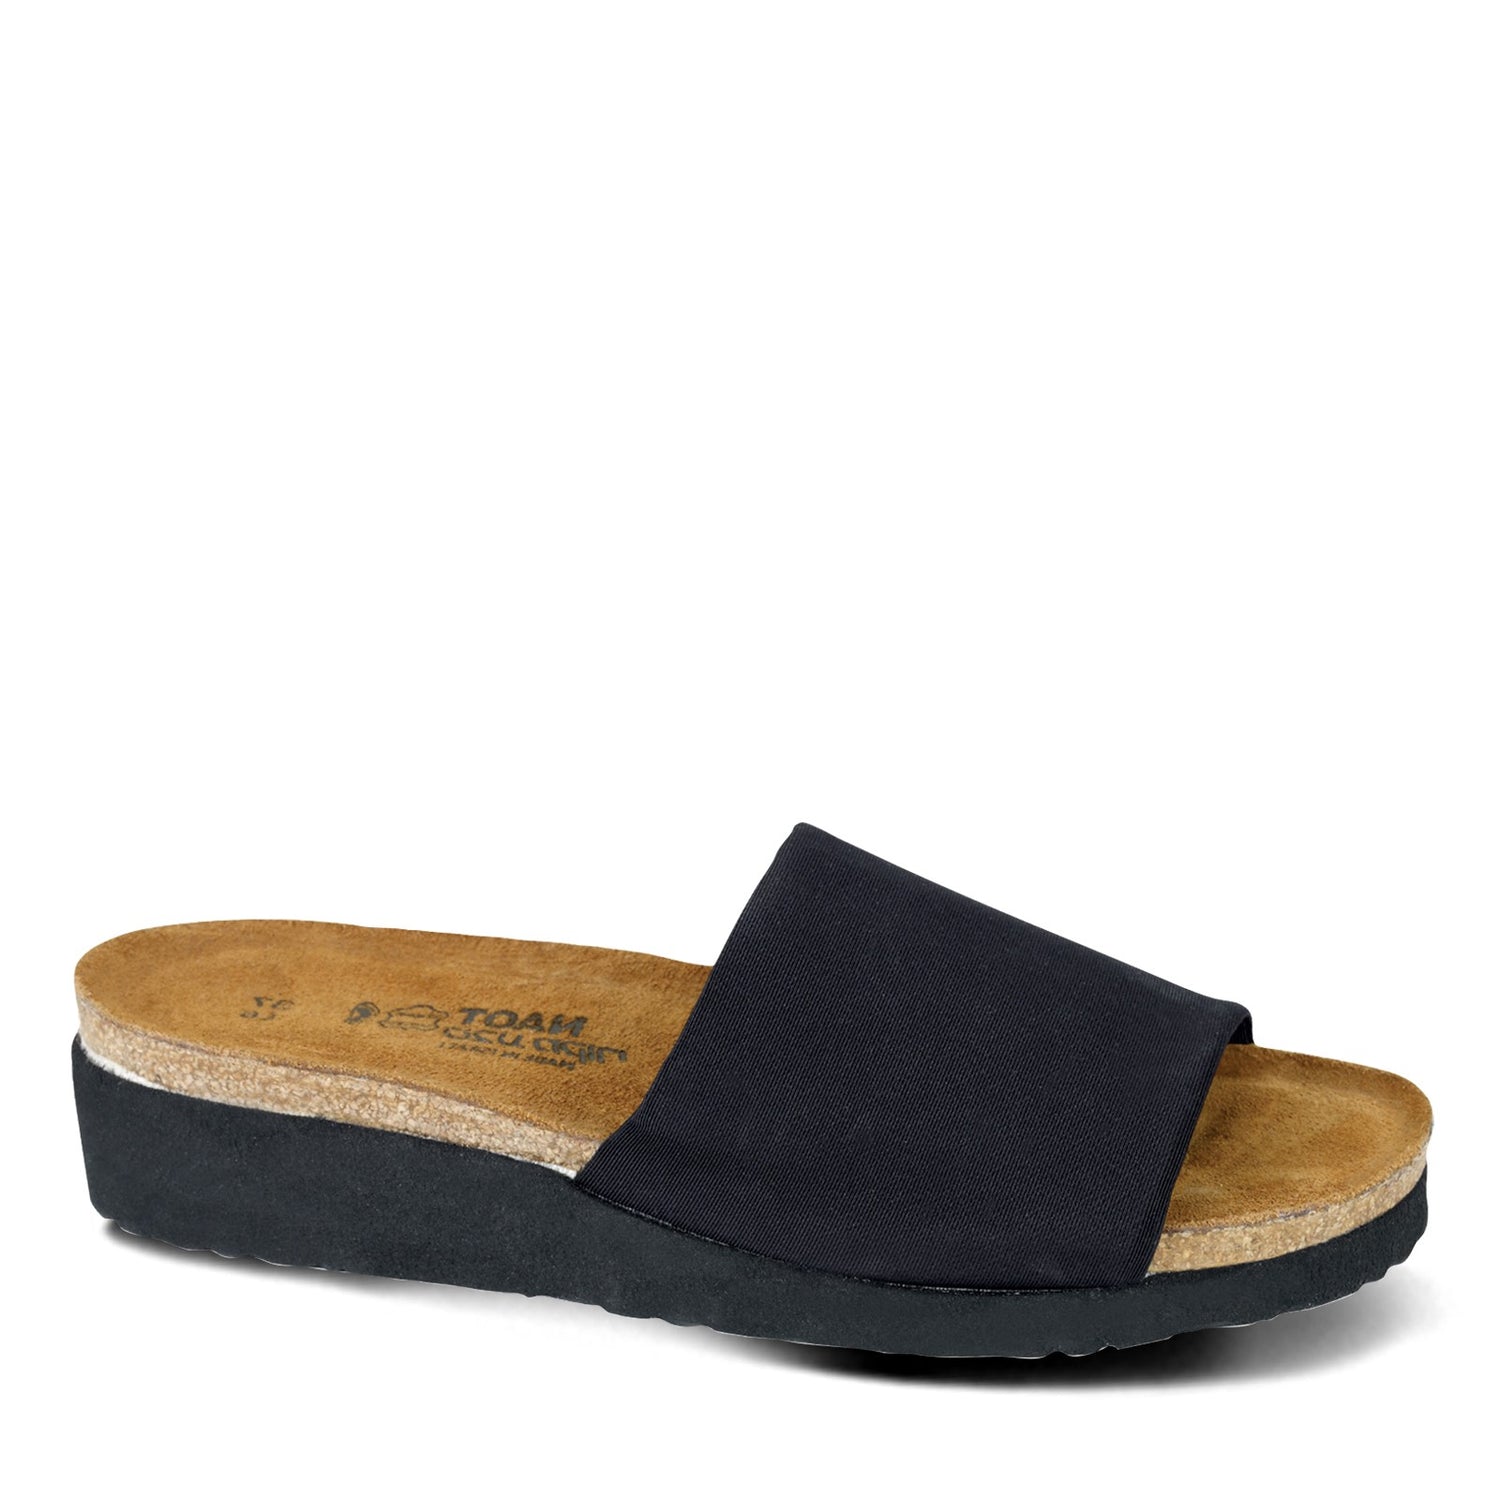 Peltz Shoes  Women's Naot Alana Slide Sandal BLACK 4447-902